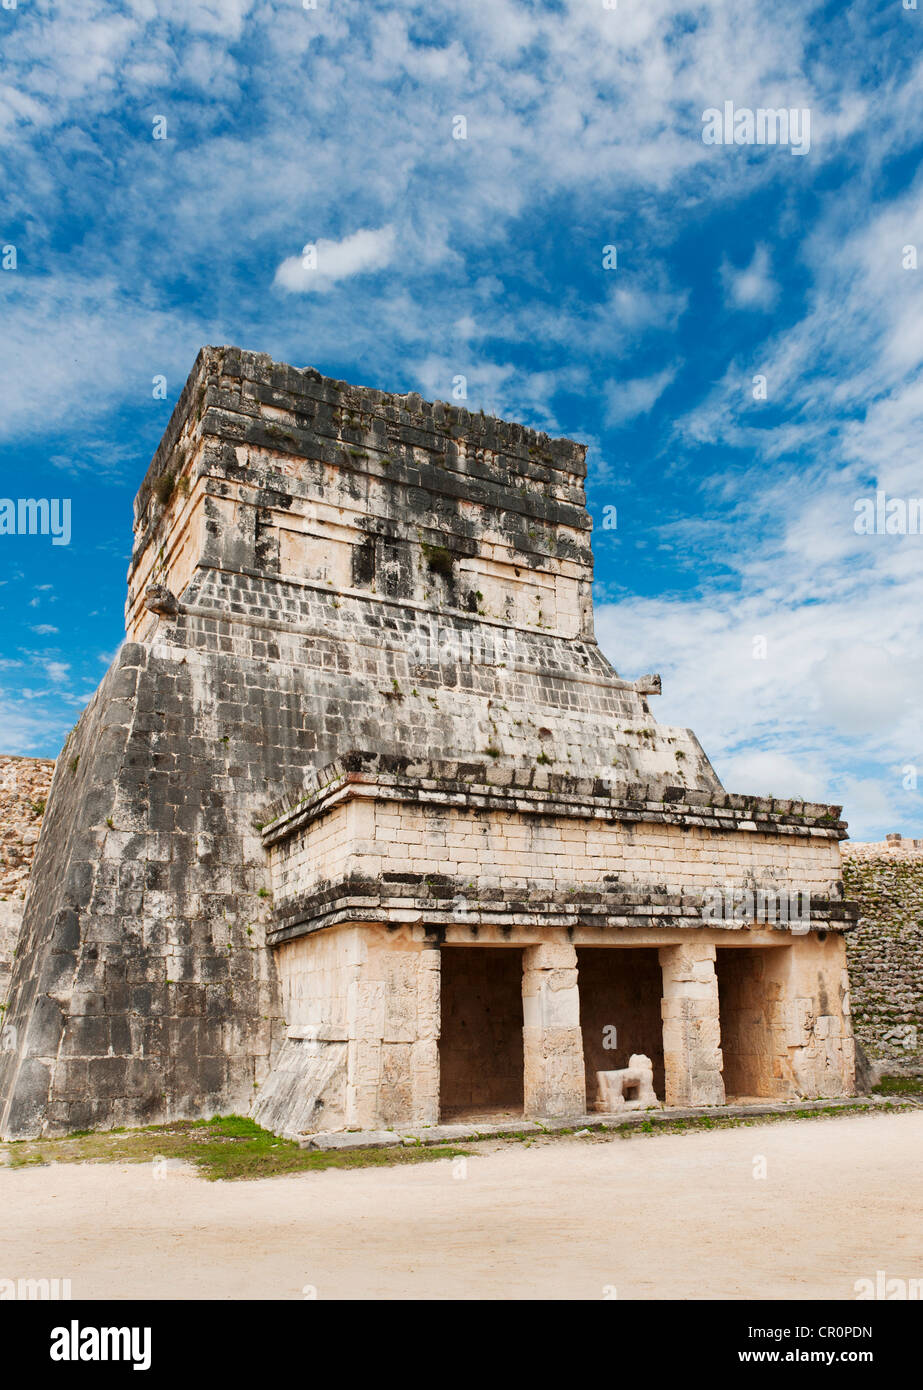 Messico, Yucatan, Chichen Itza, rovine maya Foto Stock